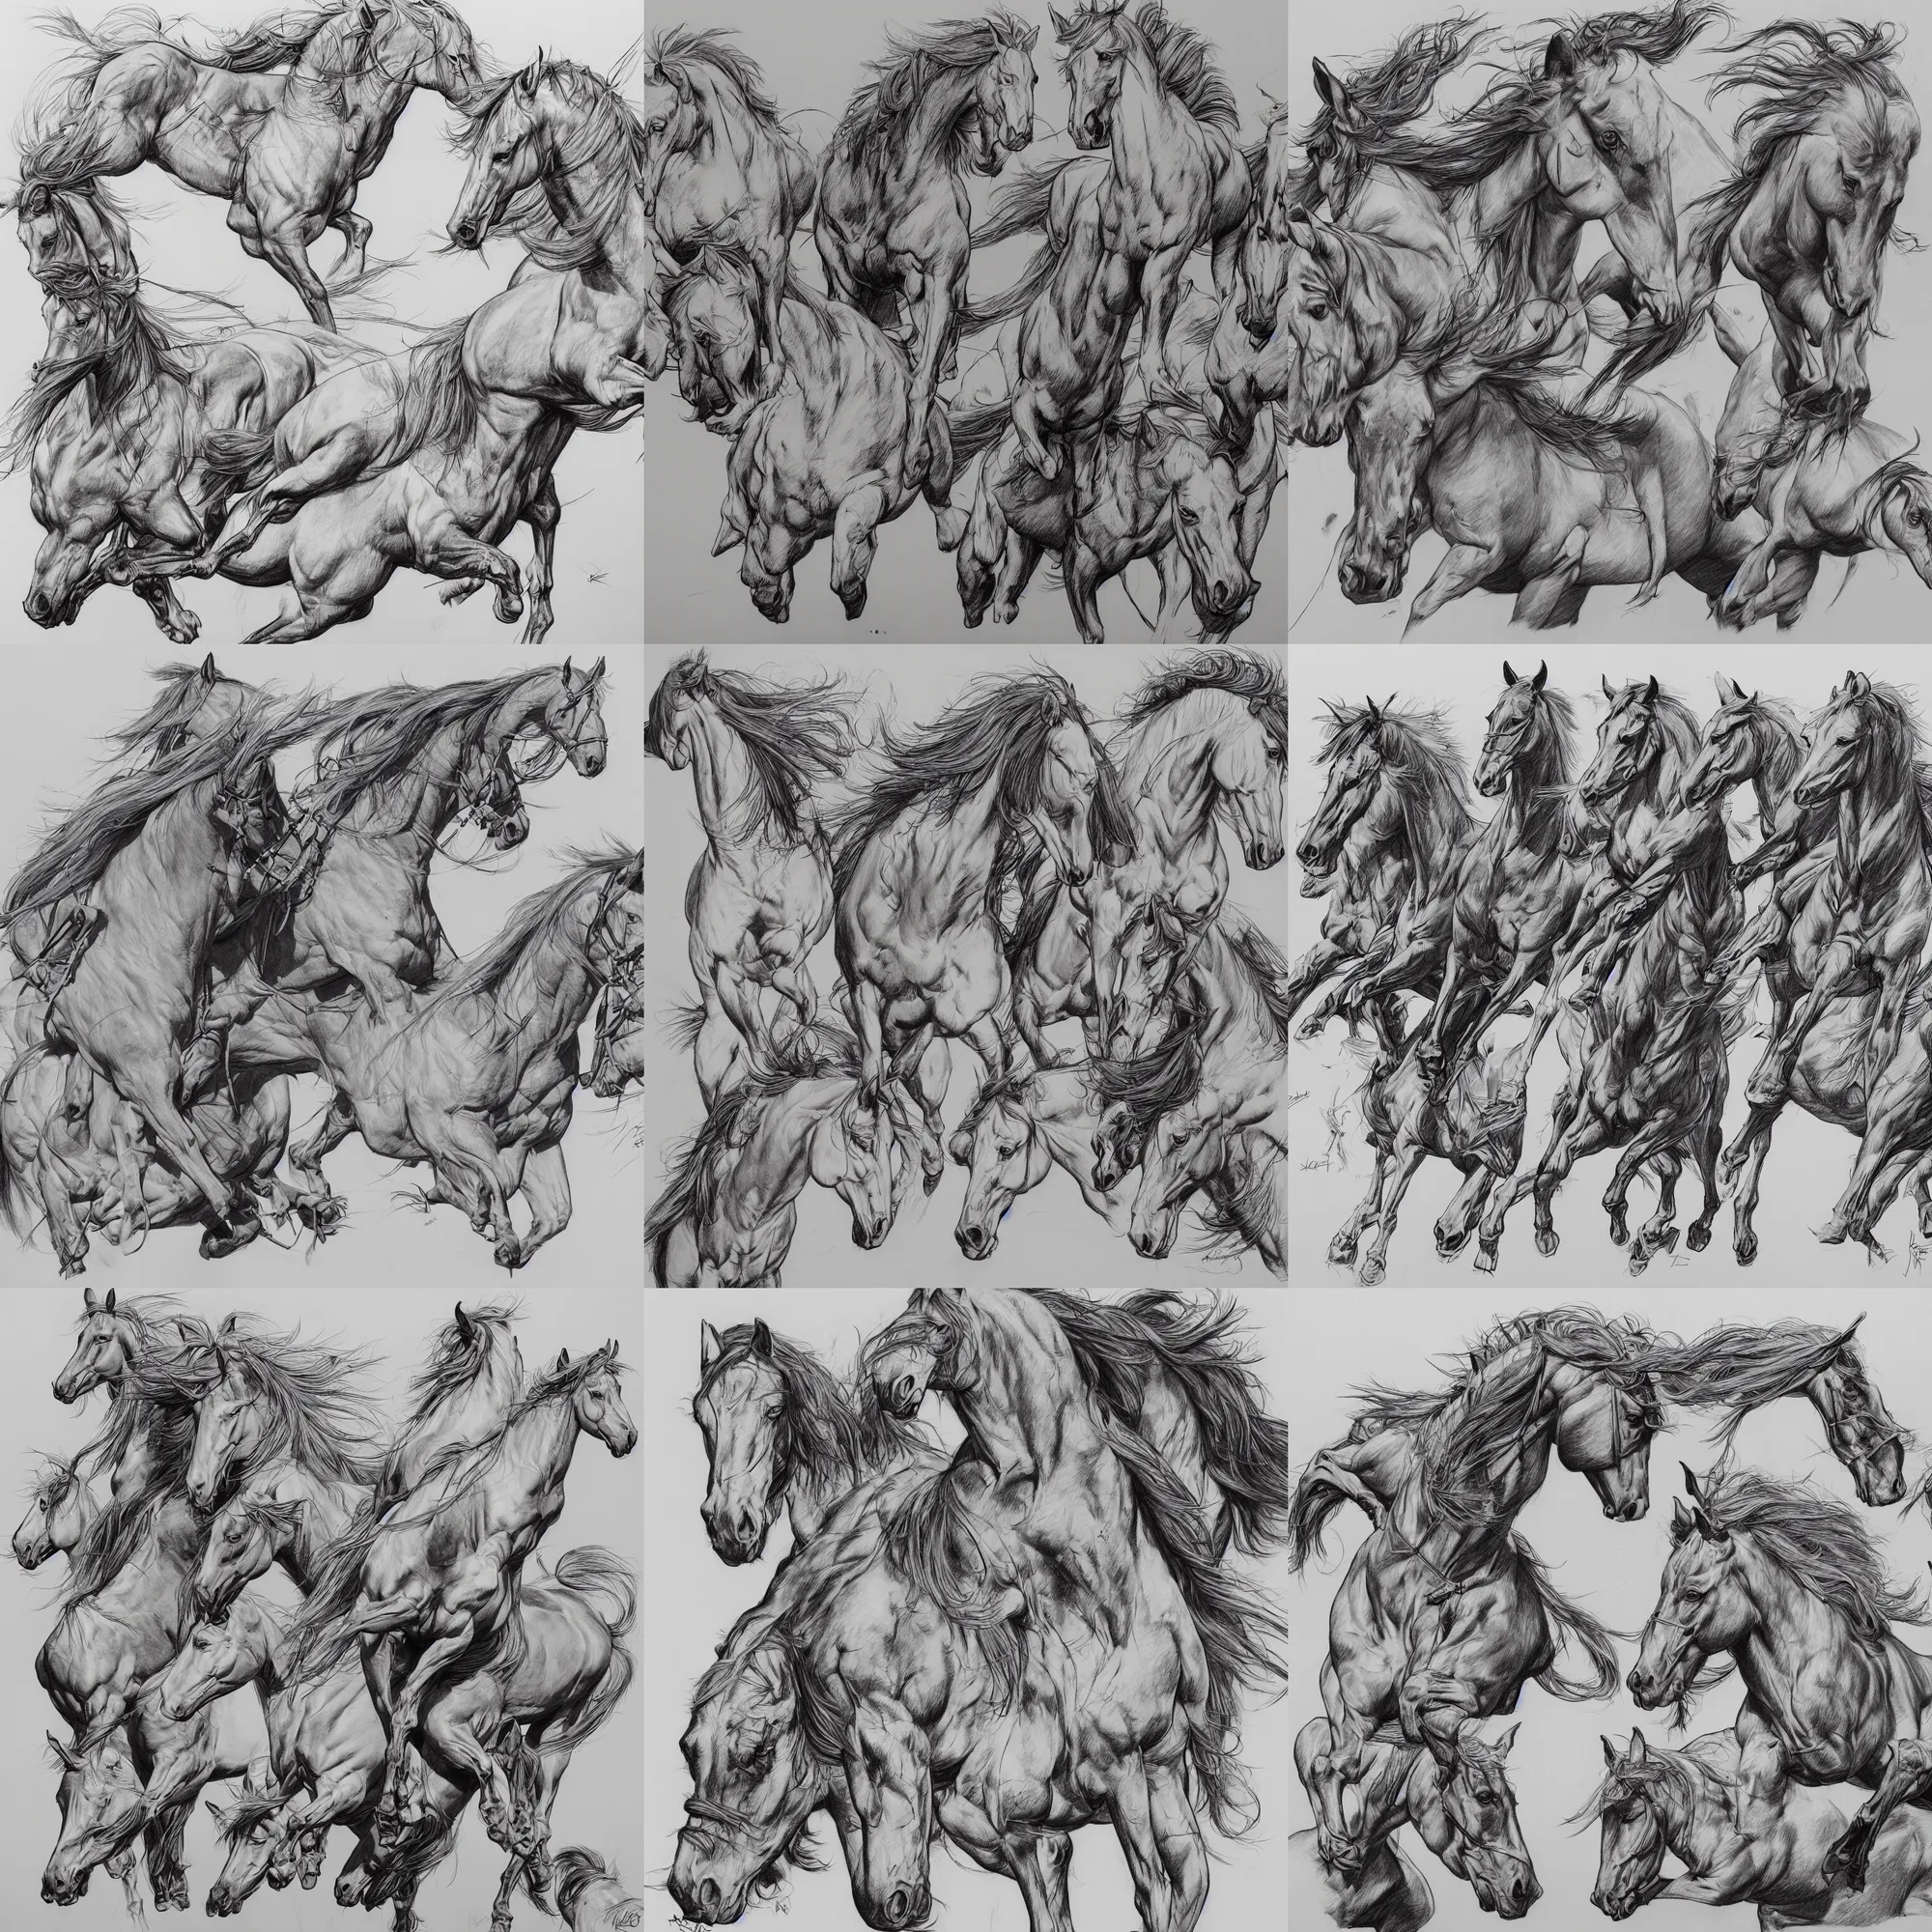 Prompt: drawing of horses by Kim Jung gi and Karl Kopinski